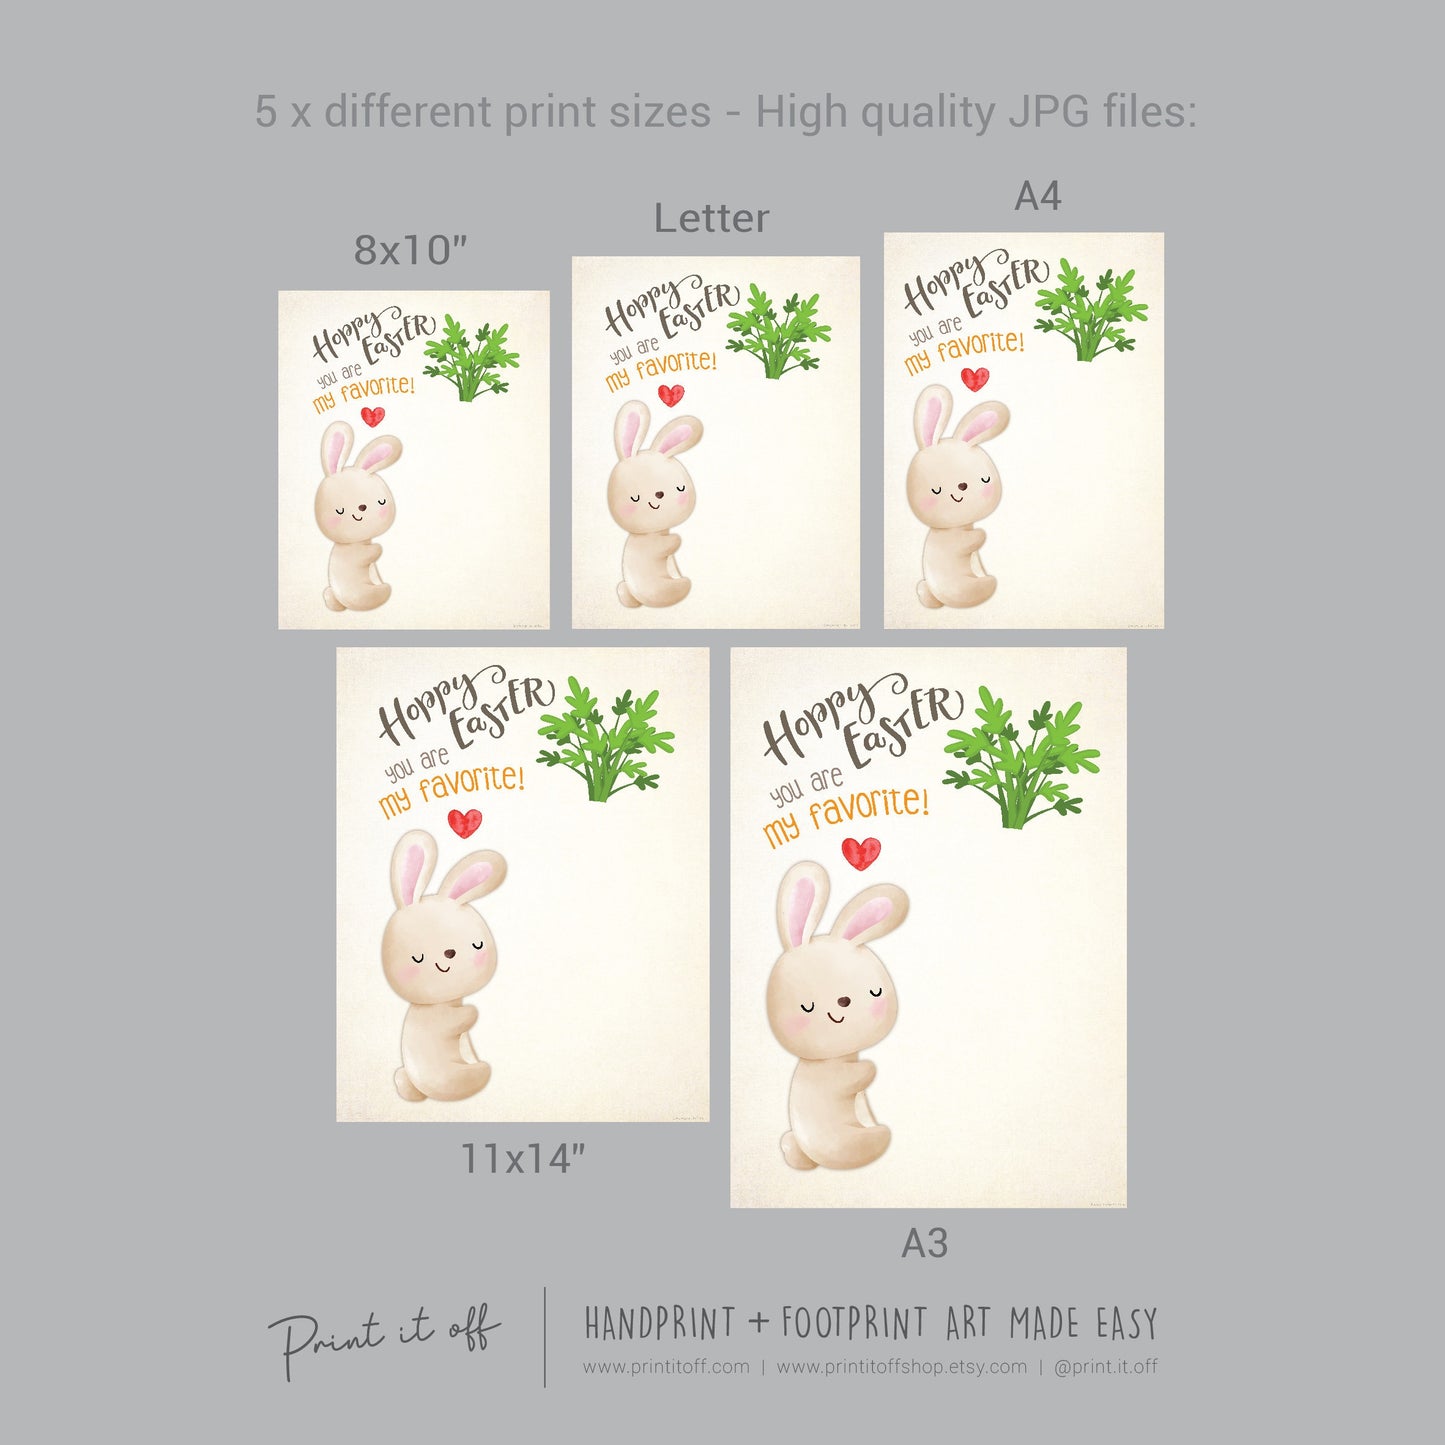 Favorite Carrot Bunny Hoppy Easter / Footprint Handprint Art / Baby Toddler / Keepsake Memory Craft DIY Card / Print It Off 0840